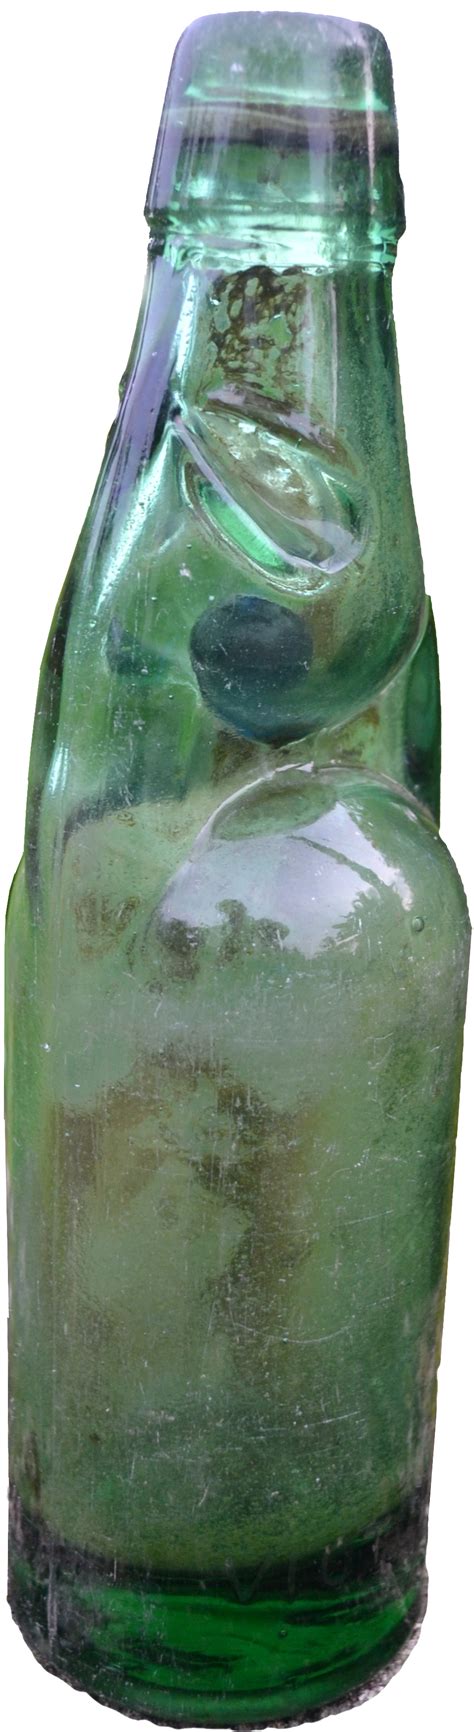 File:Codd-neck Soda Water Bottle from Kerala.png - Wikimedia Commons